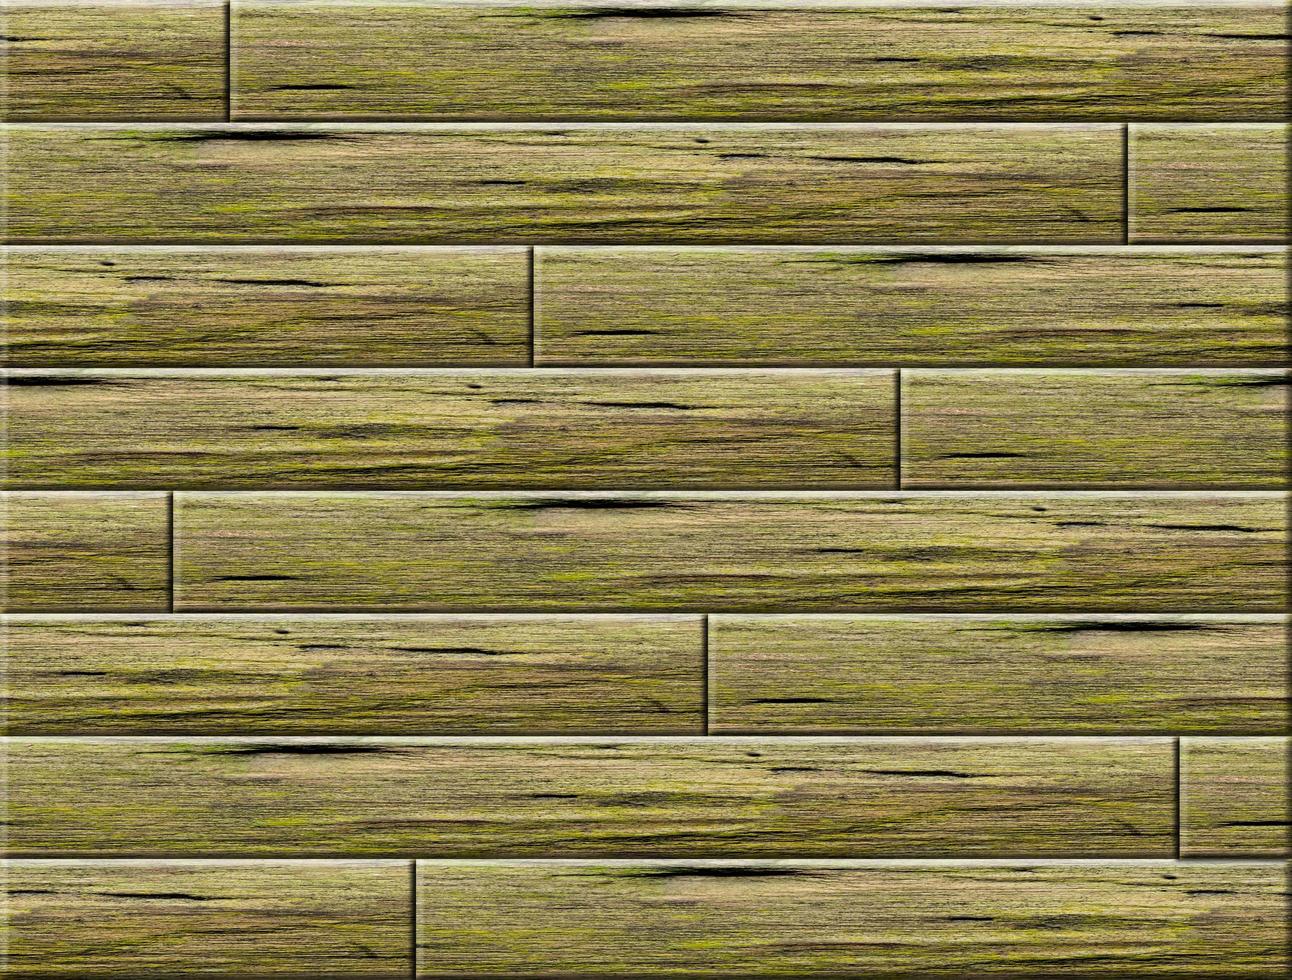 houten vloer patroon achtergrond foto